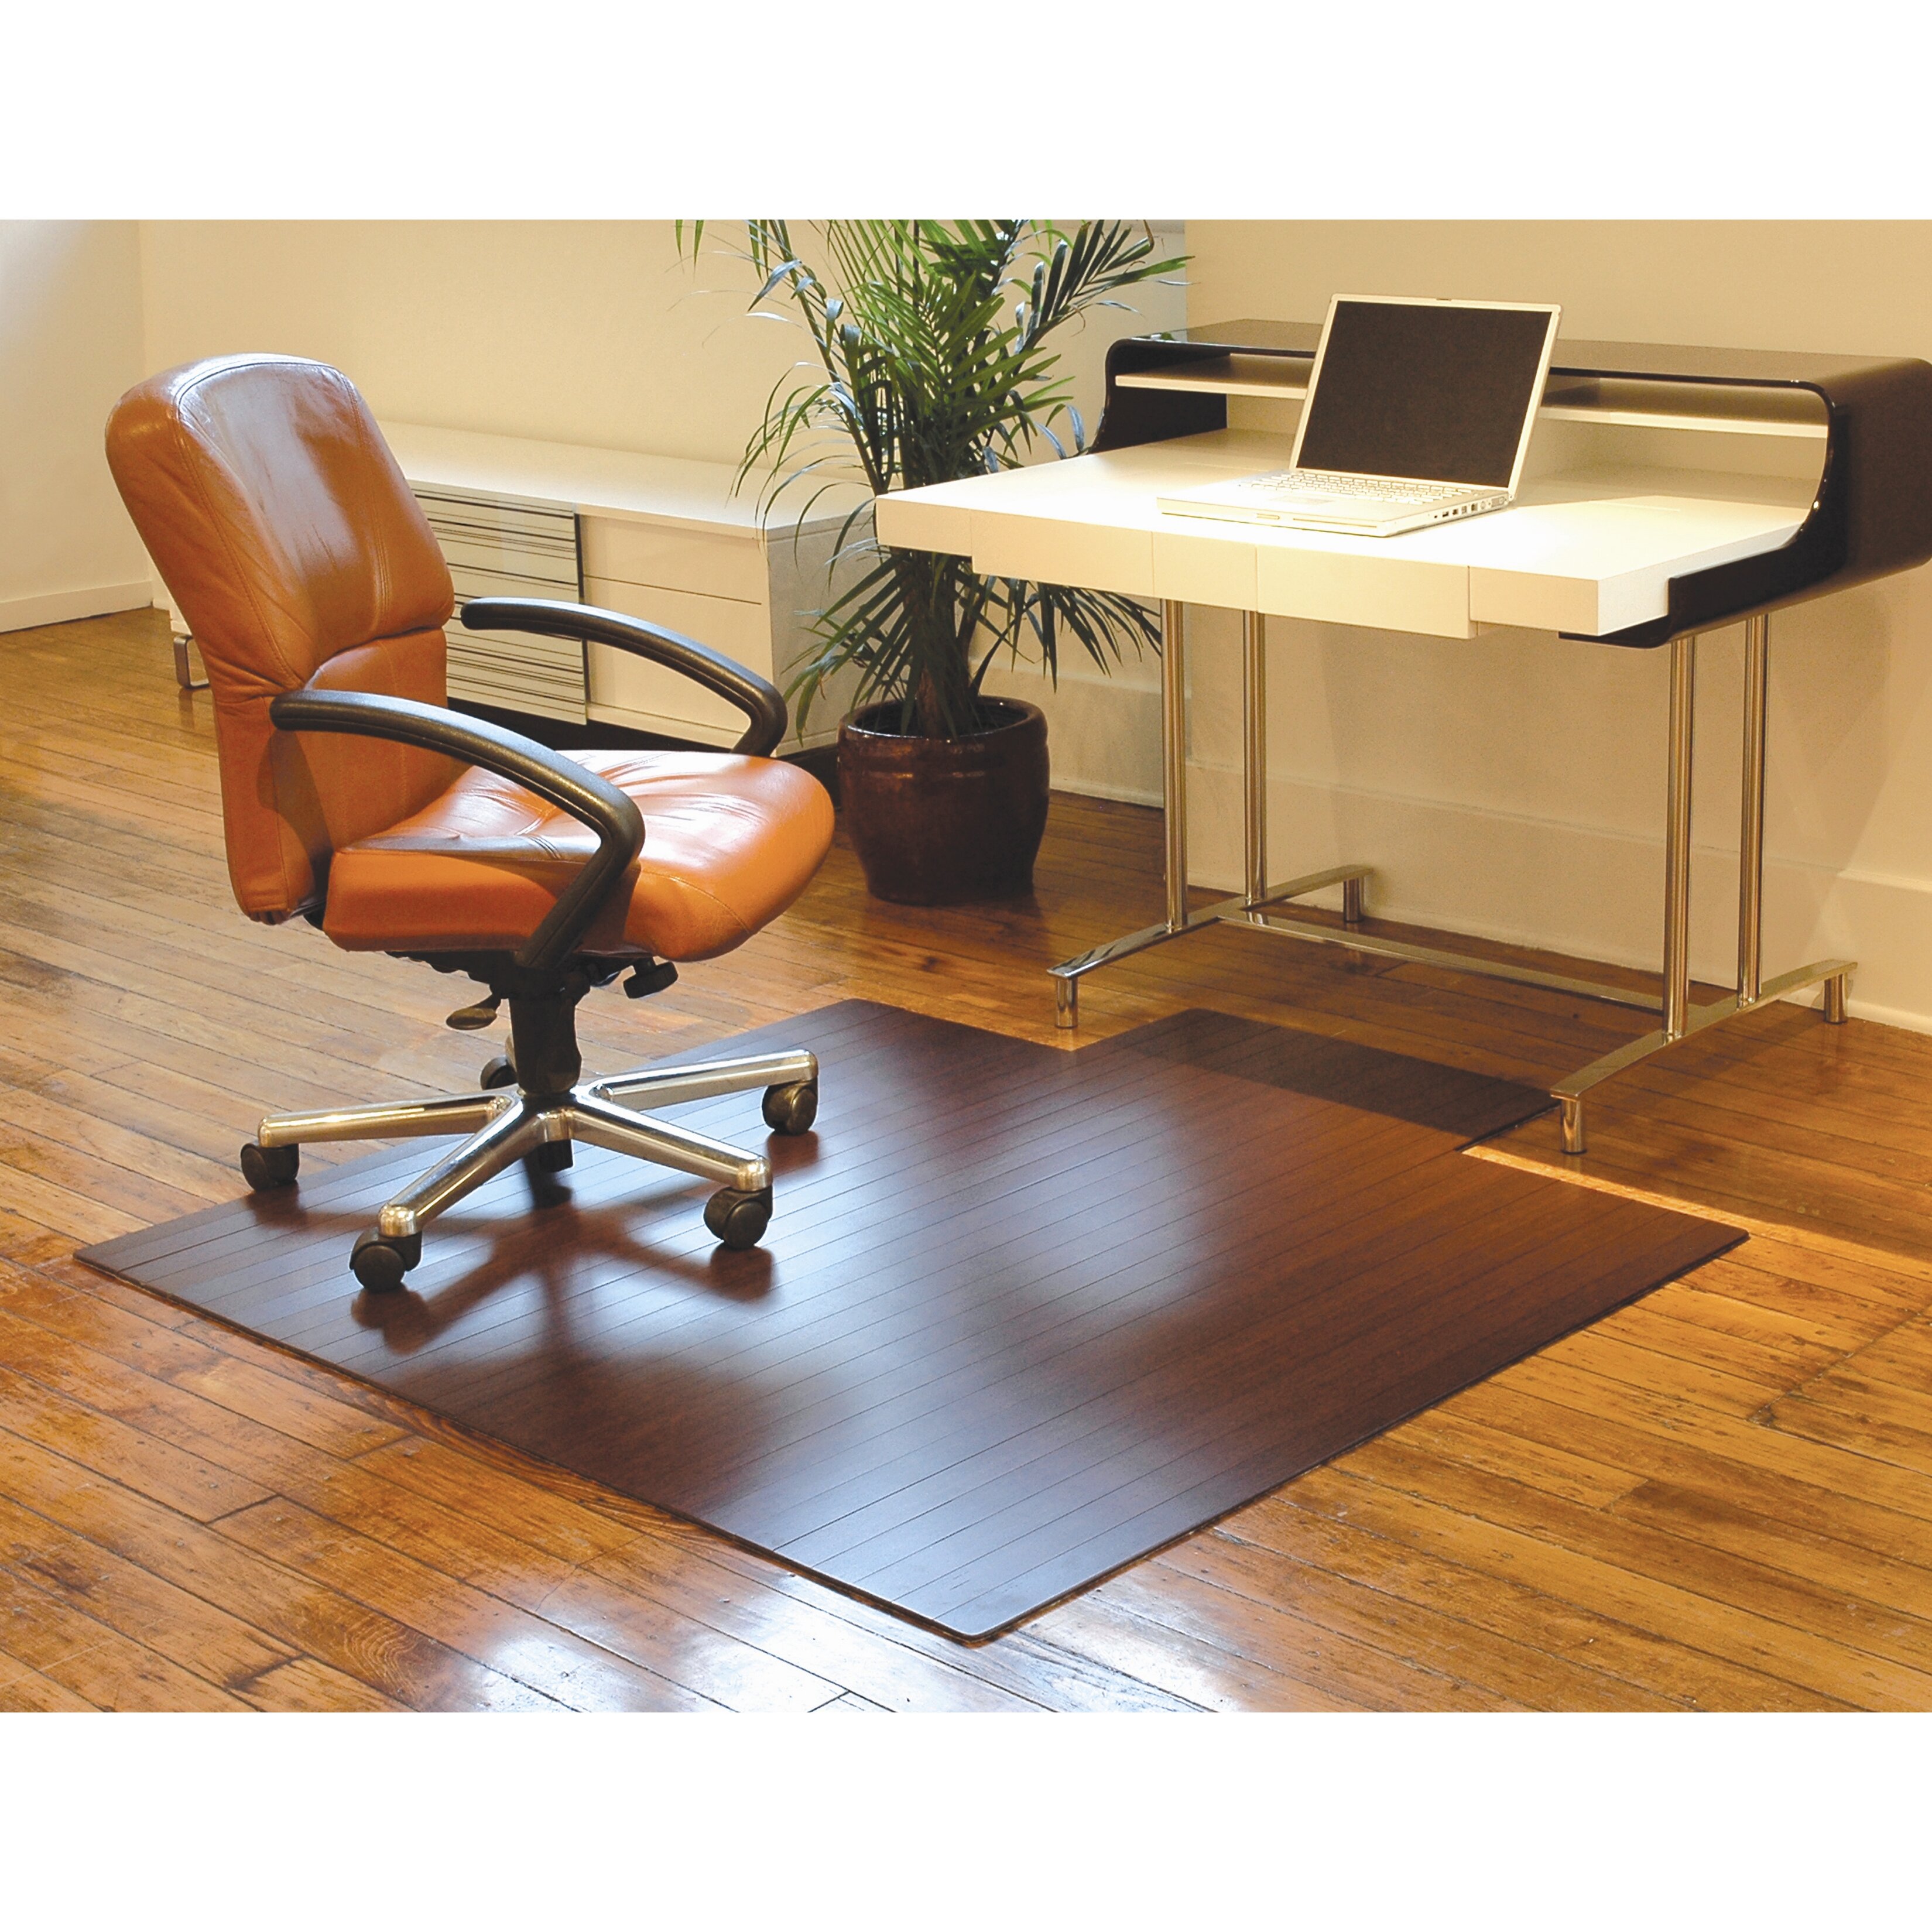 Unique Desk Chair Mat For Hardwood for Living room